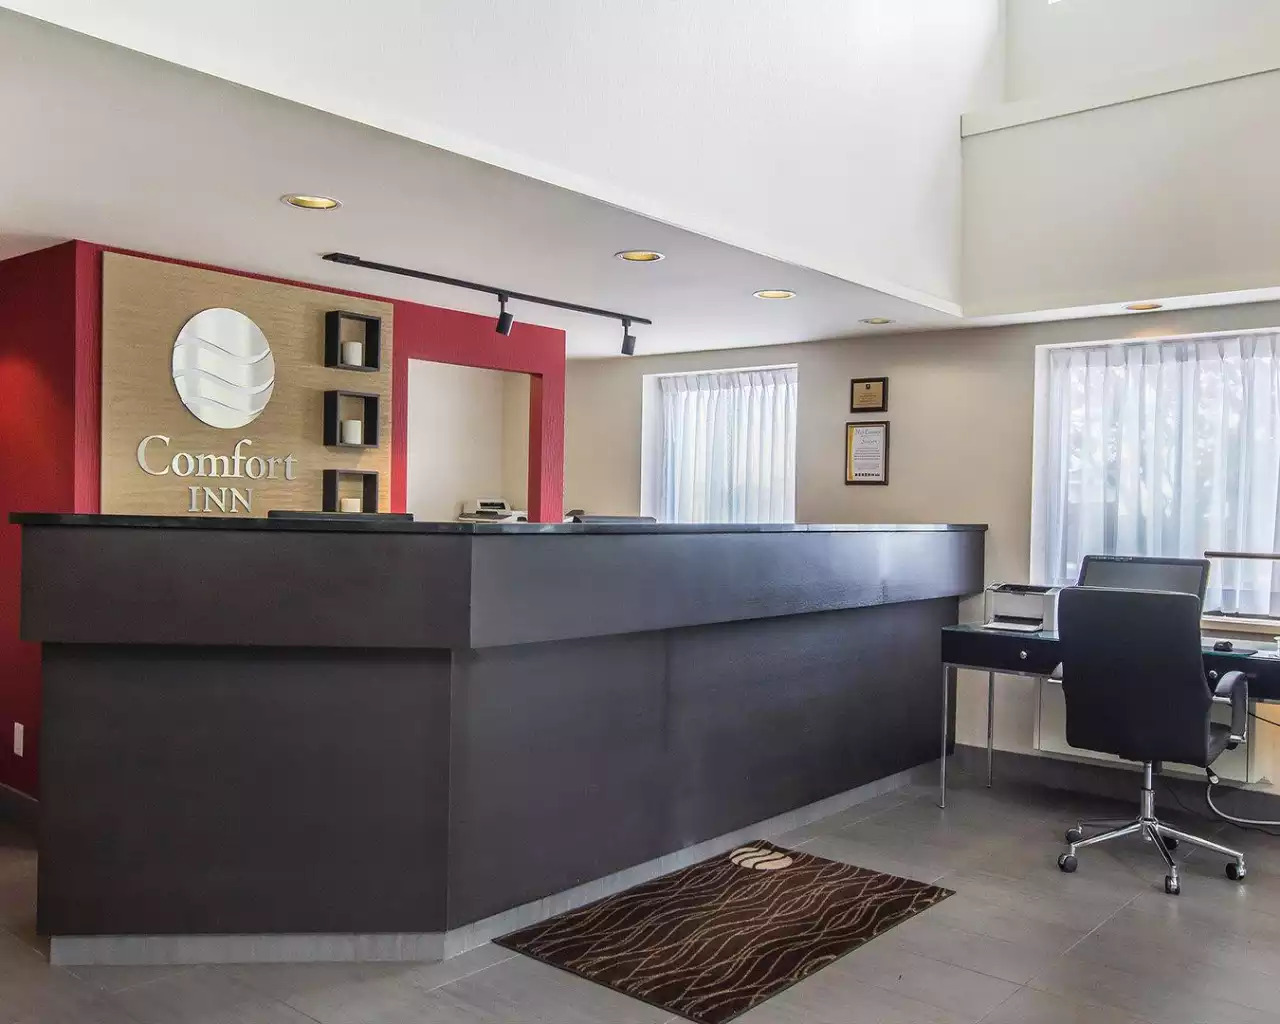 Photo of Comfort Inn Alma, Alma, QC, Canada